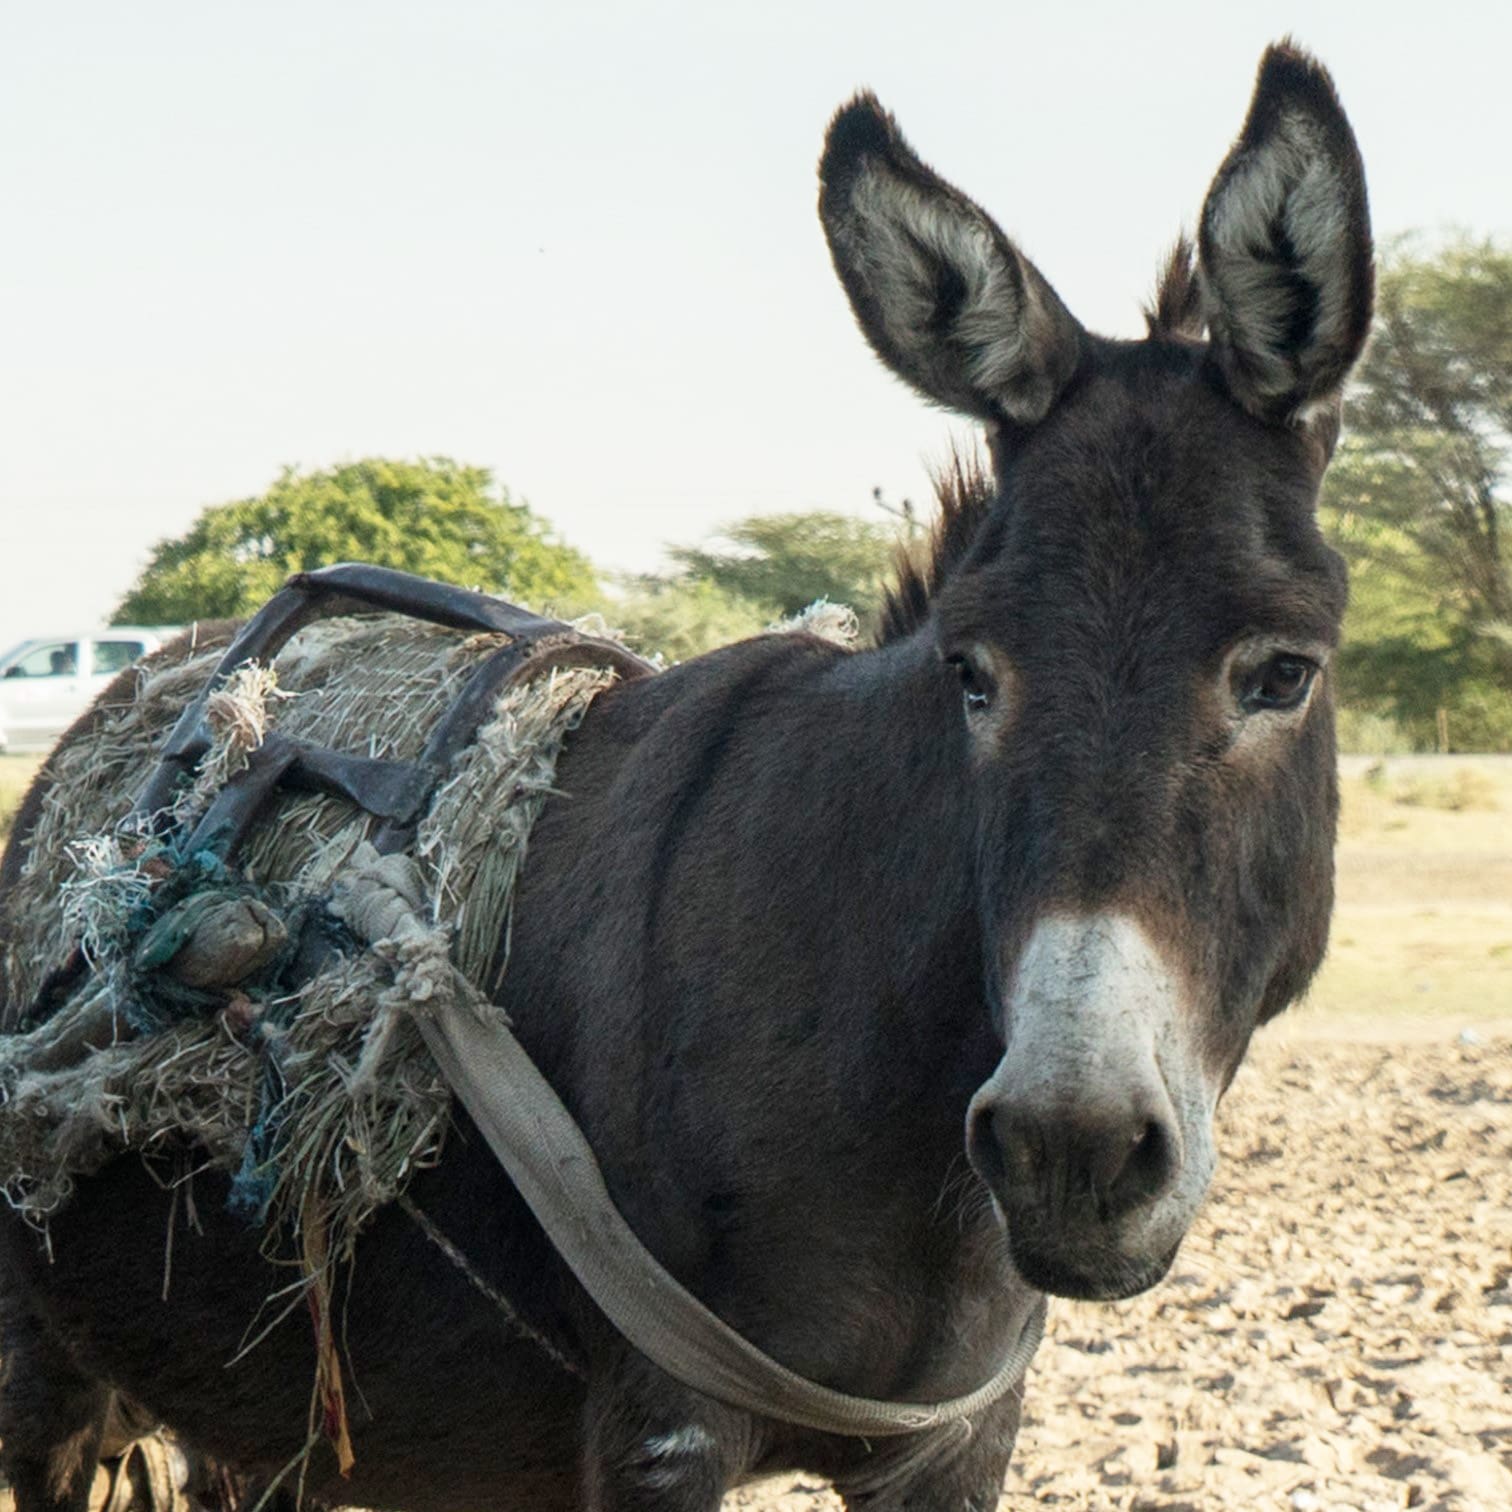 Donkey in Ethiopia